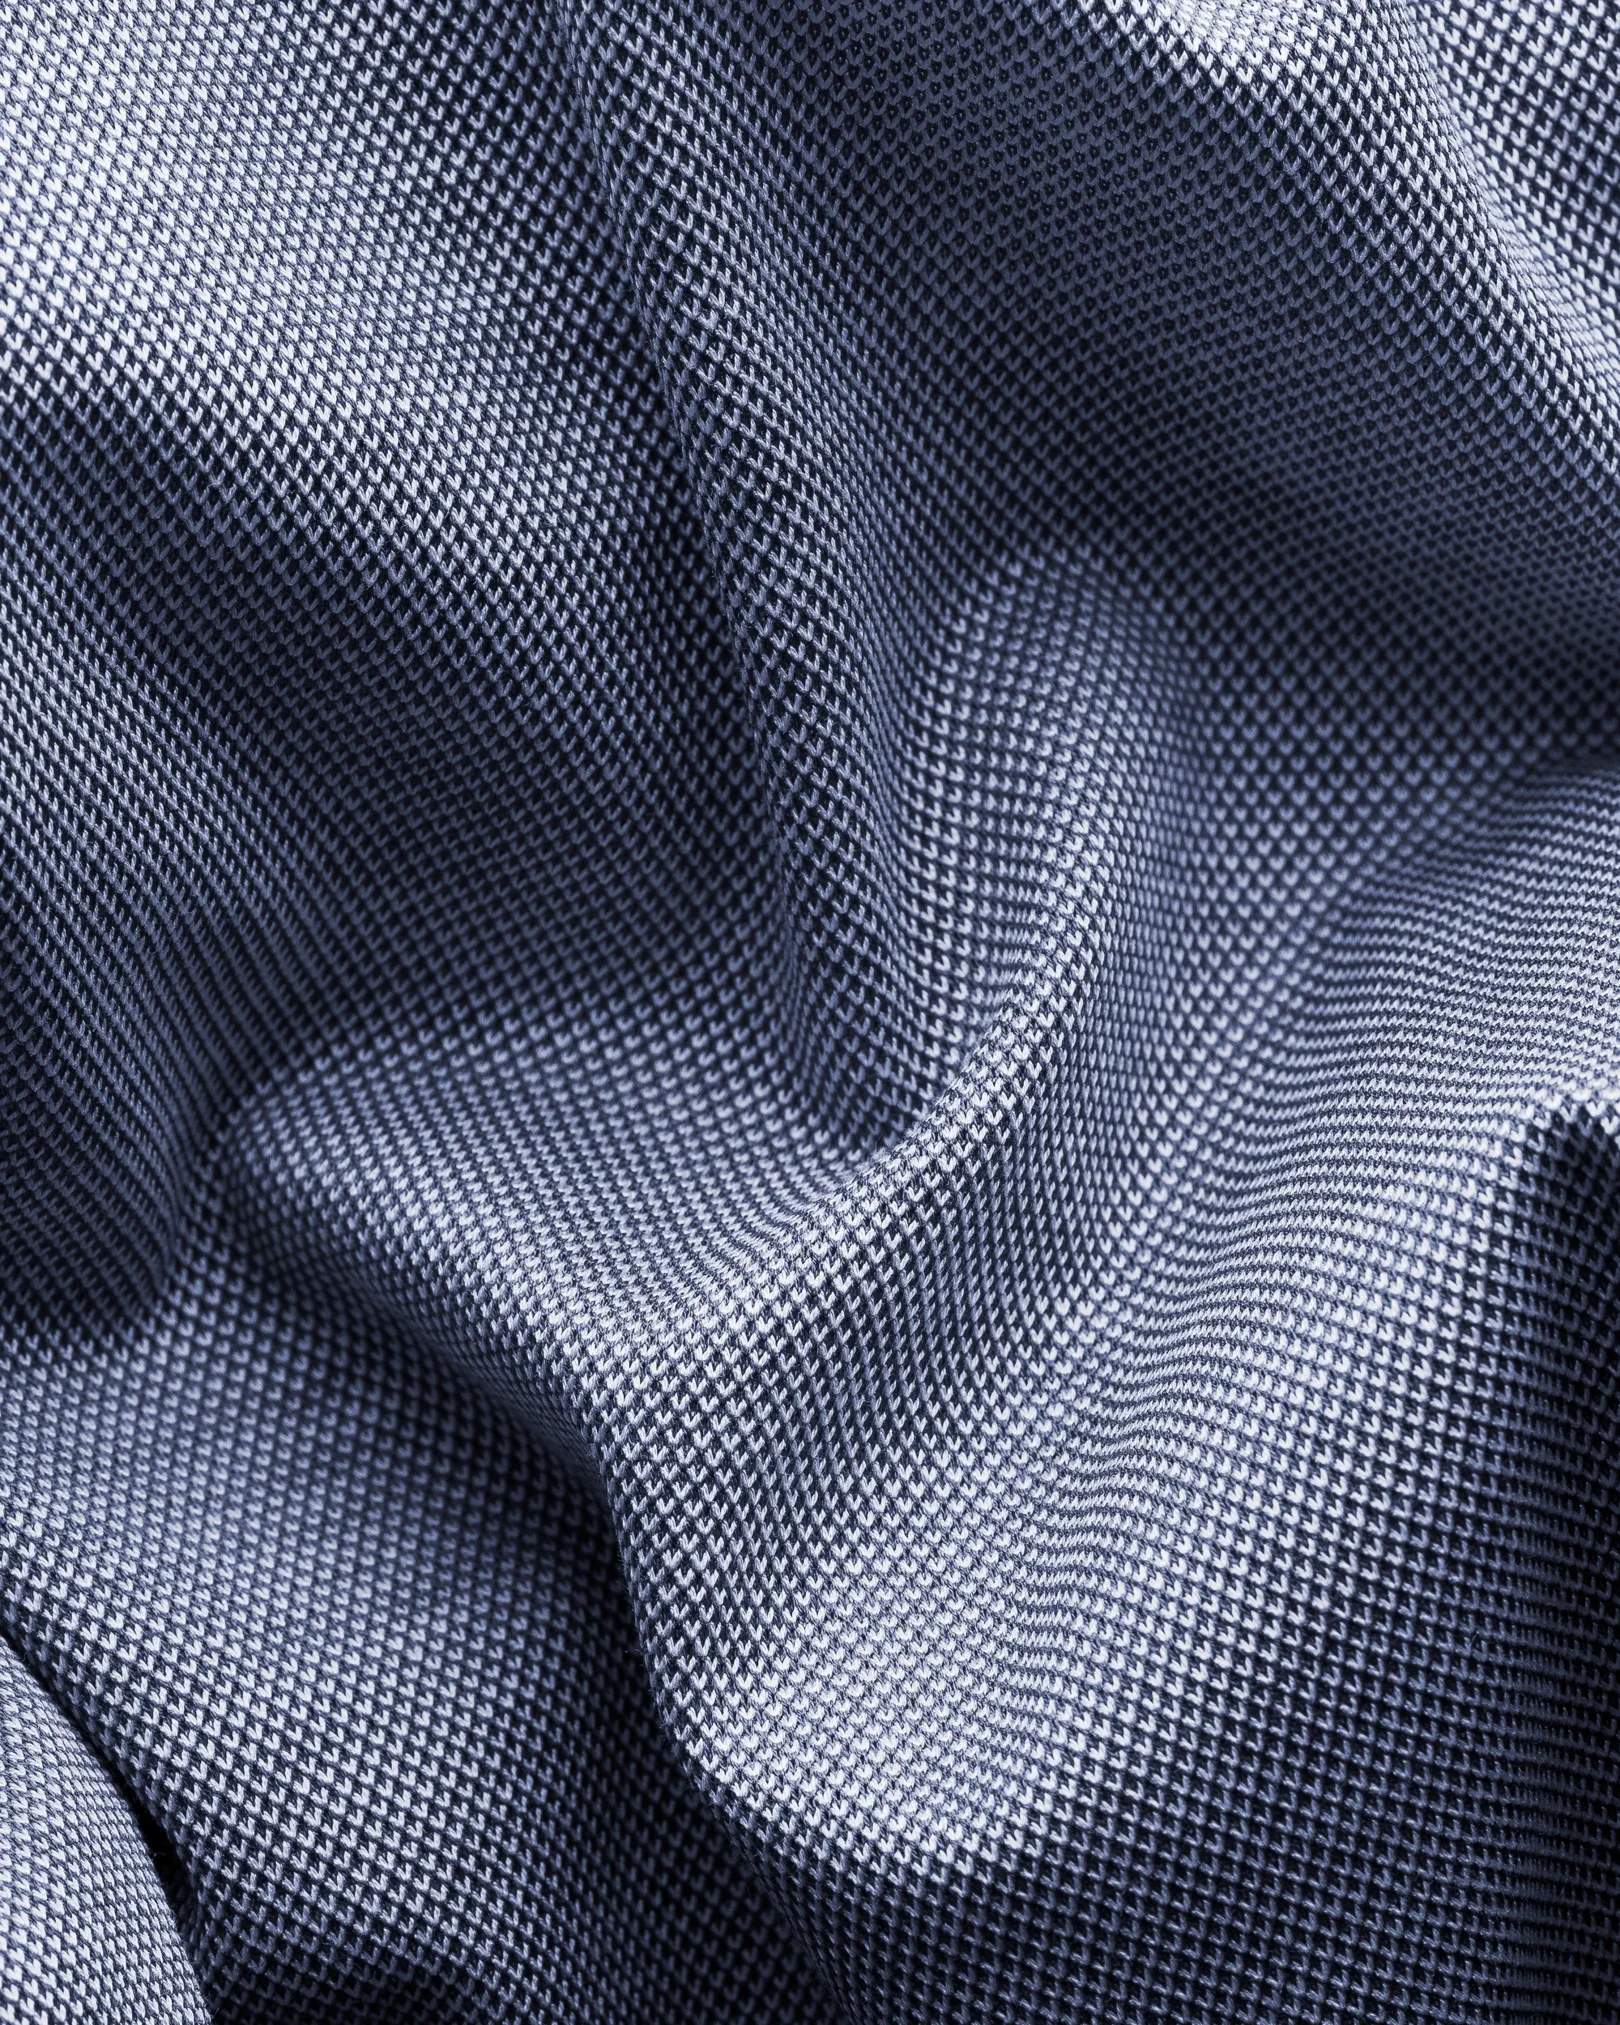 Eton - dark blue oxford pique polo shirt